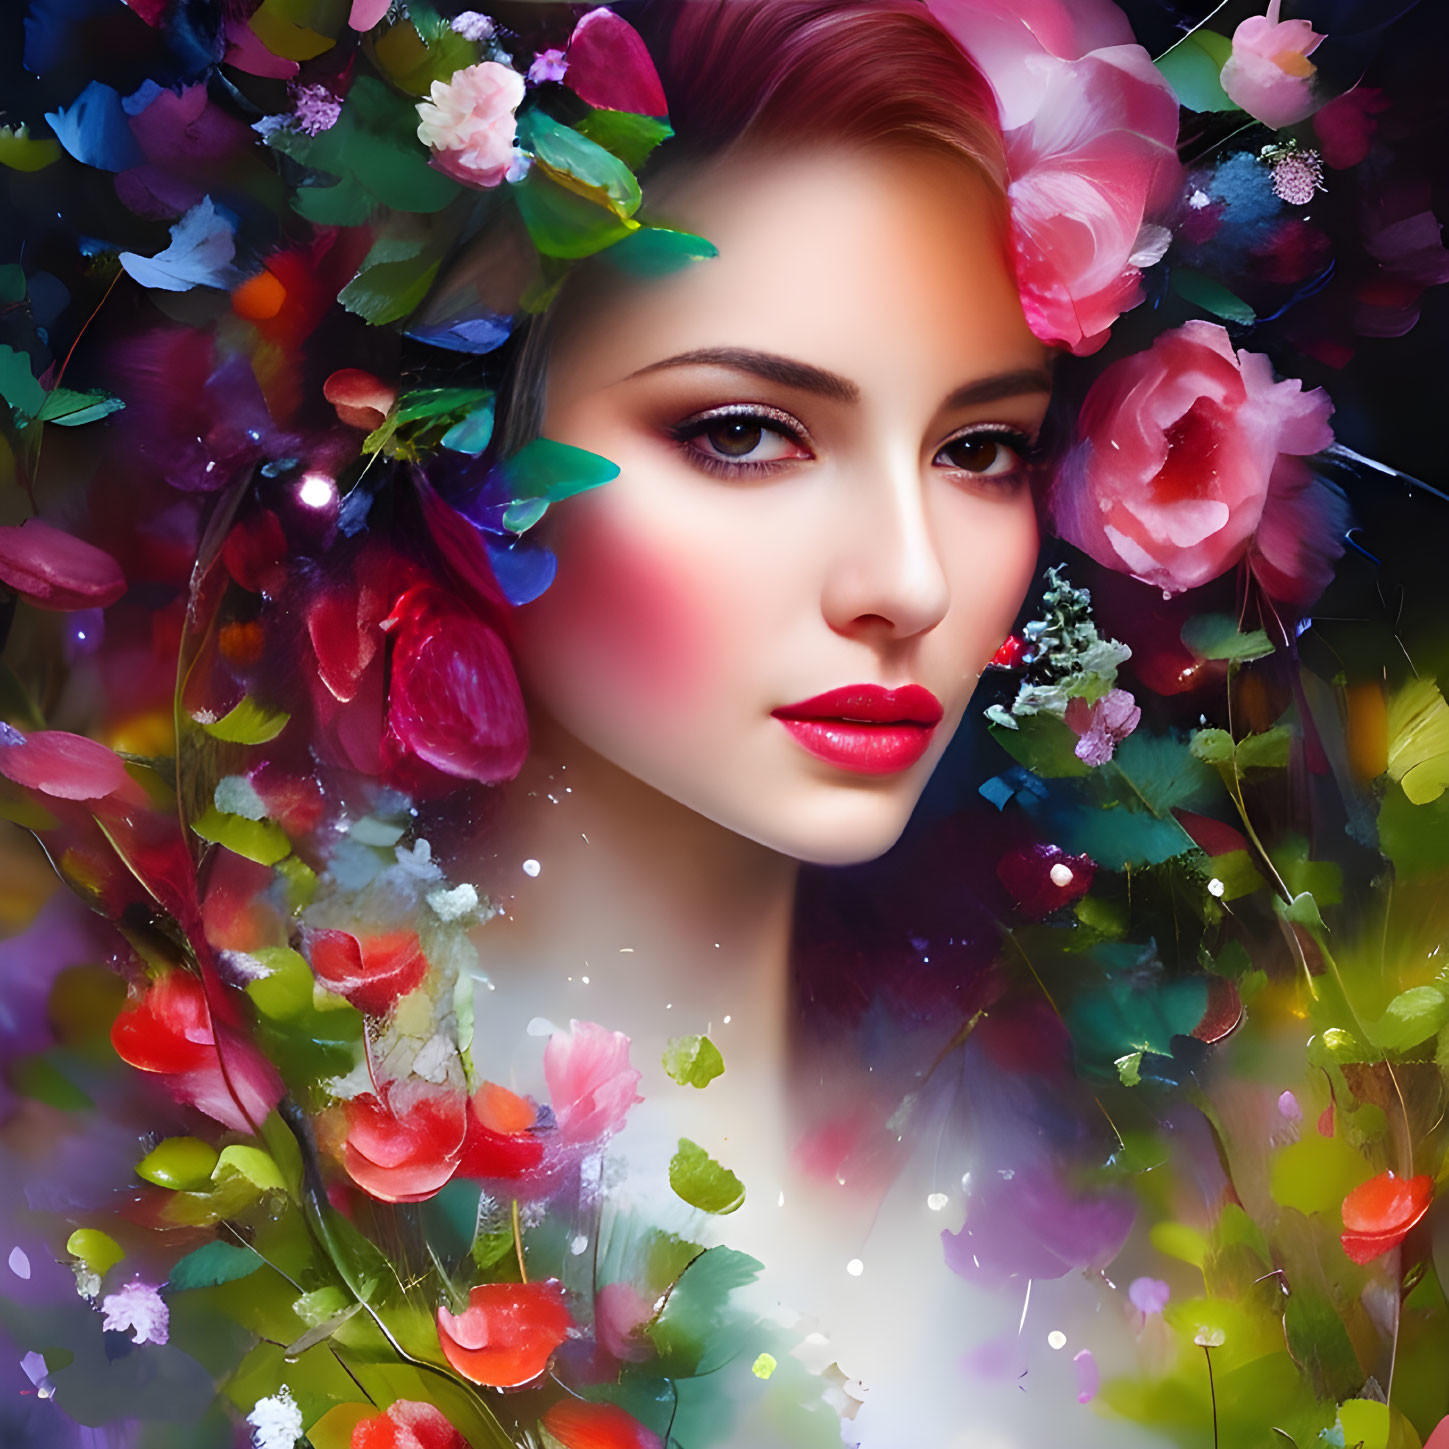 Colorful Floral Surrounding Woman in Artistic Portrait